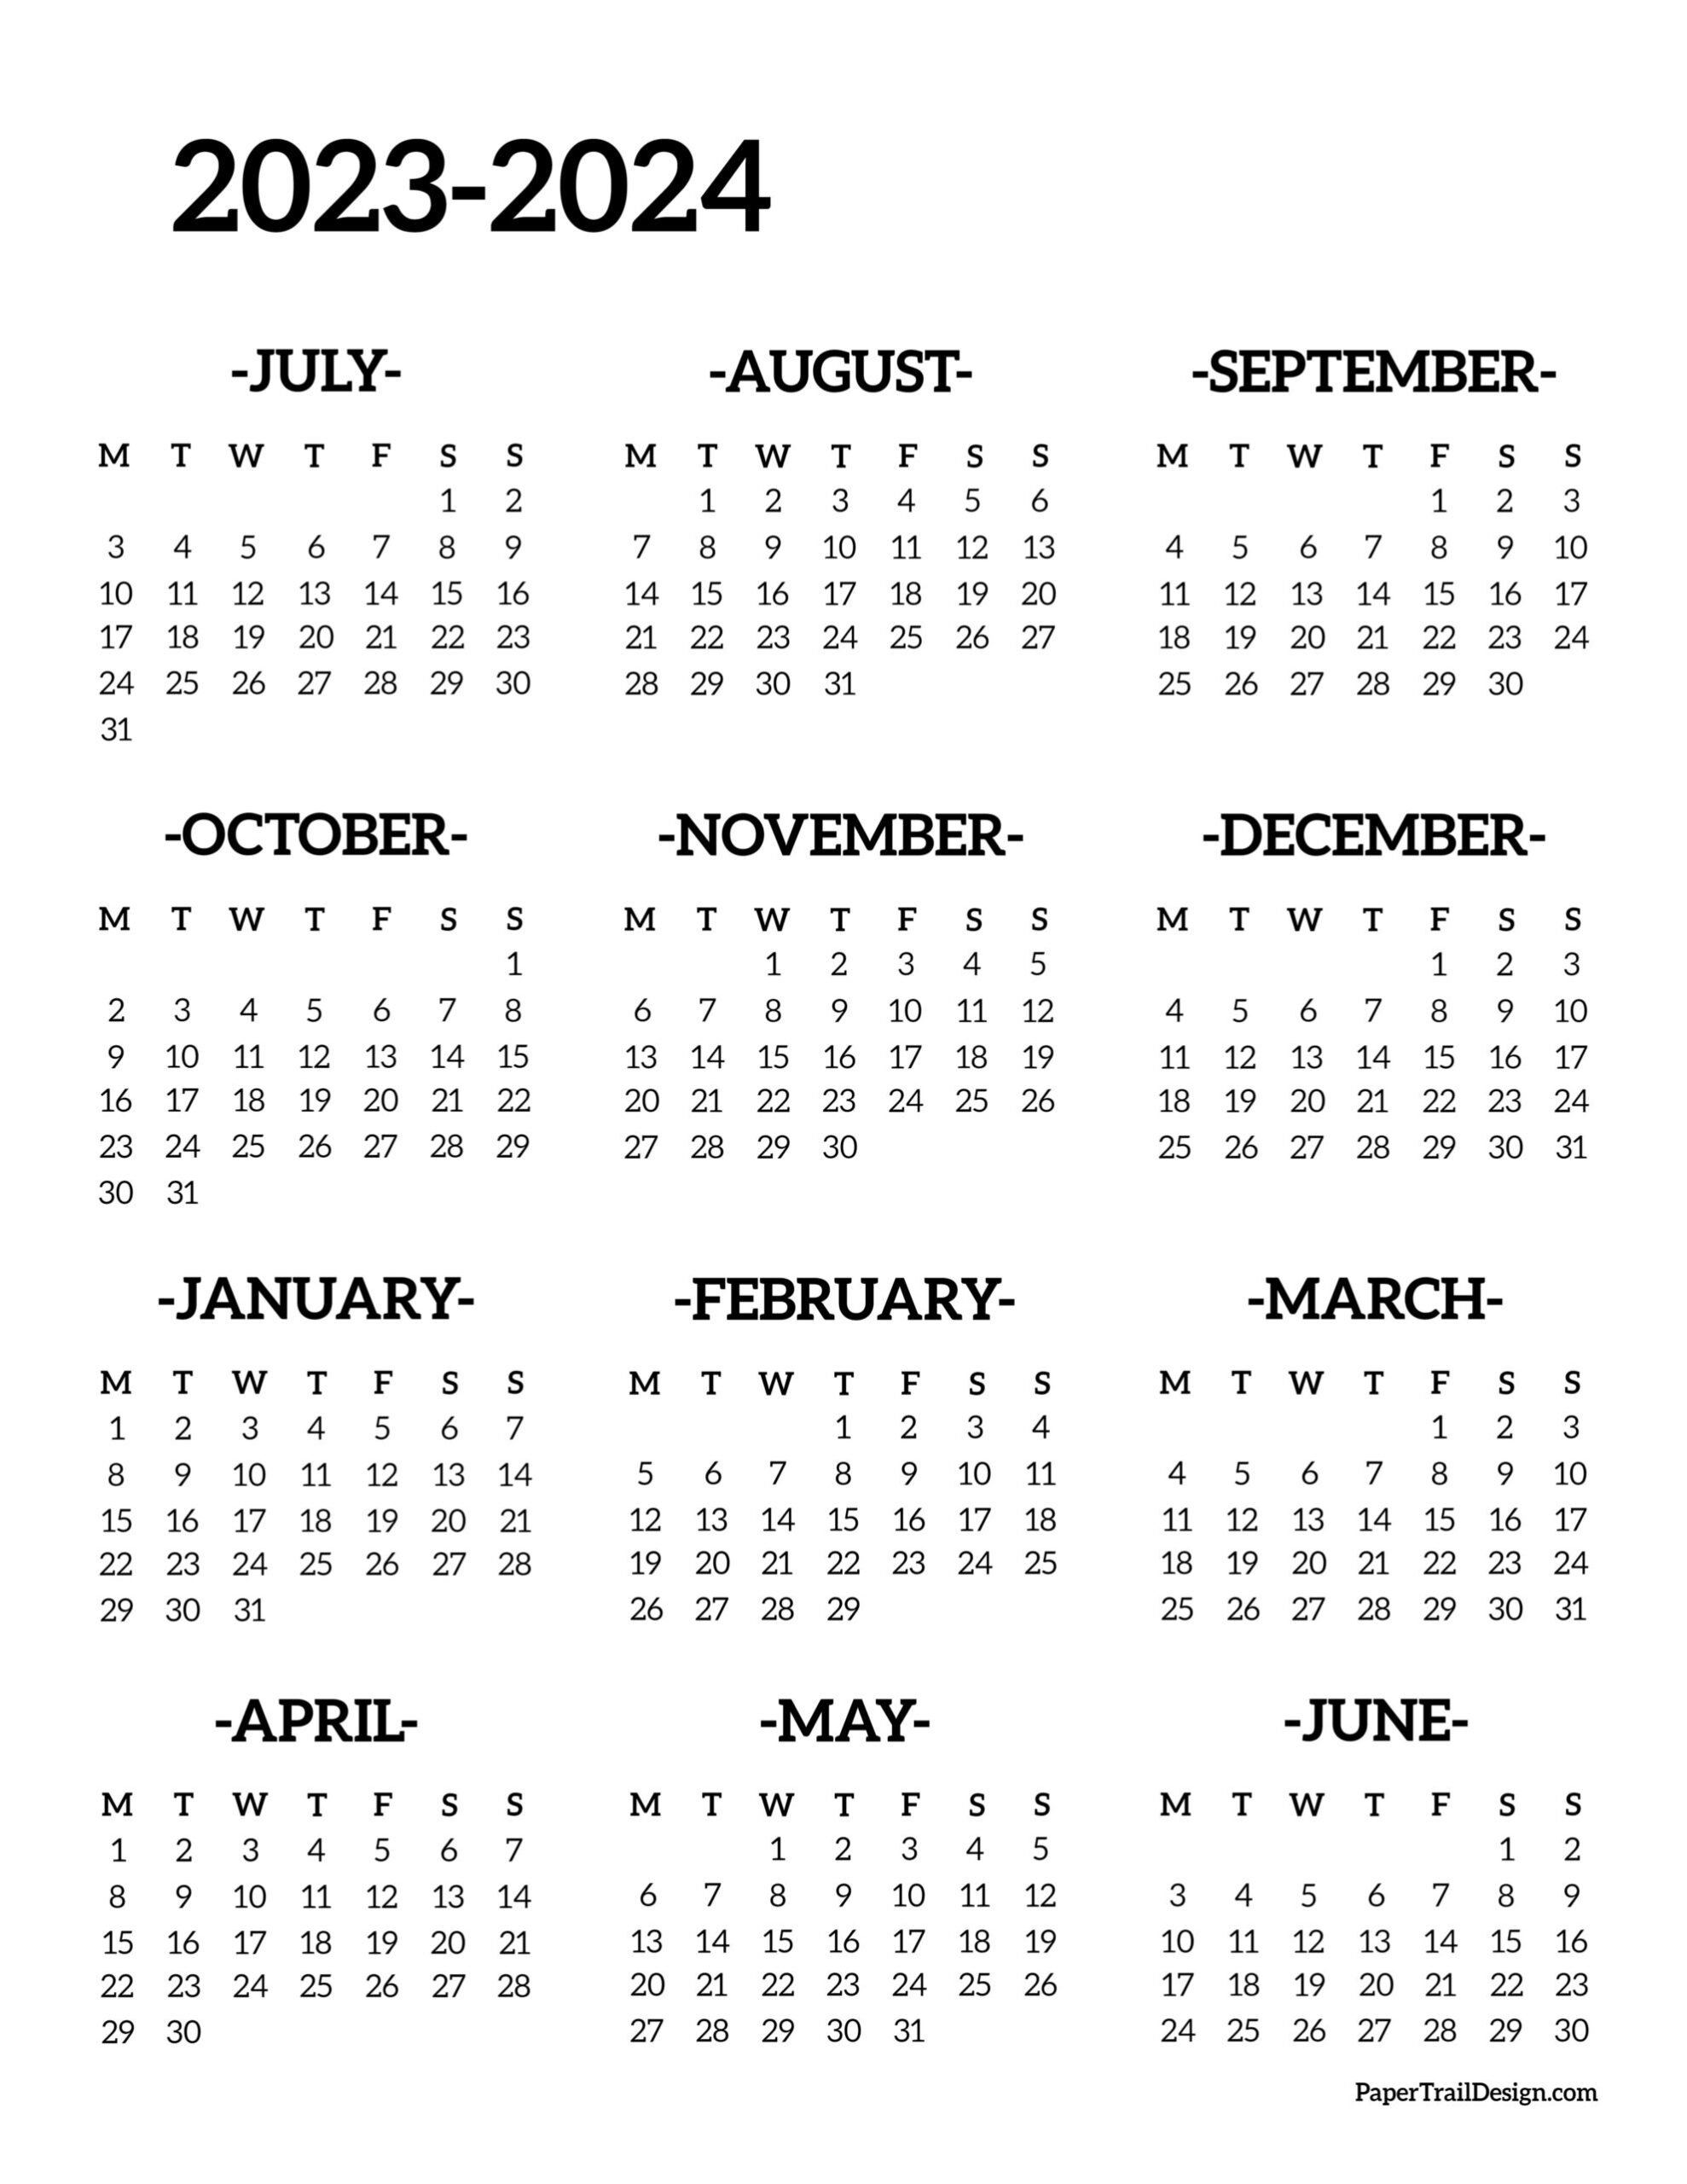 2023-2024 School Year Calendar Free Printable - Paper Trail Design | 2023 2024 Monthly Calendar Printable